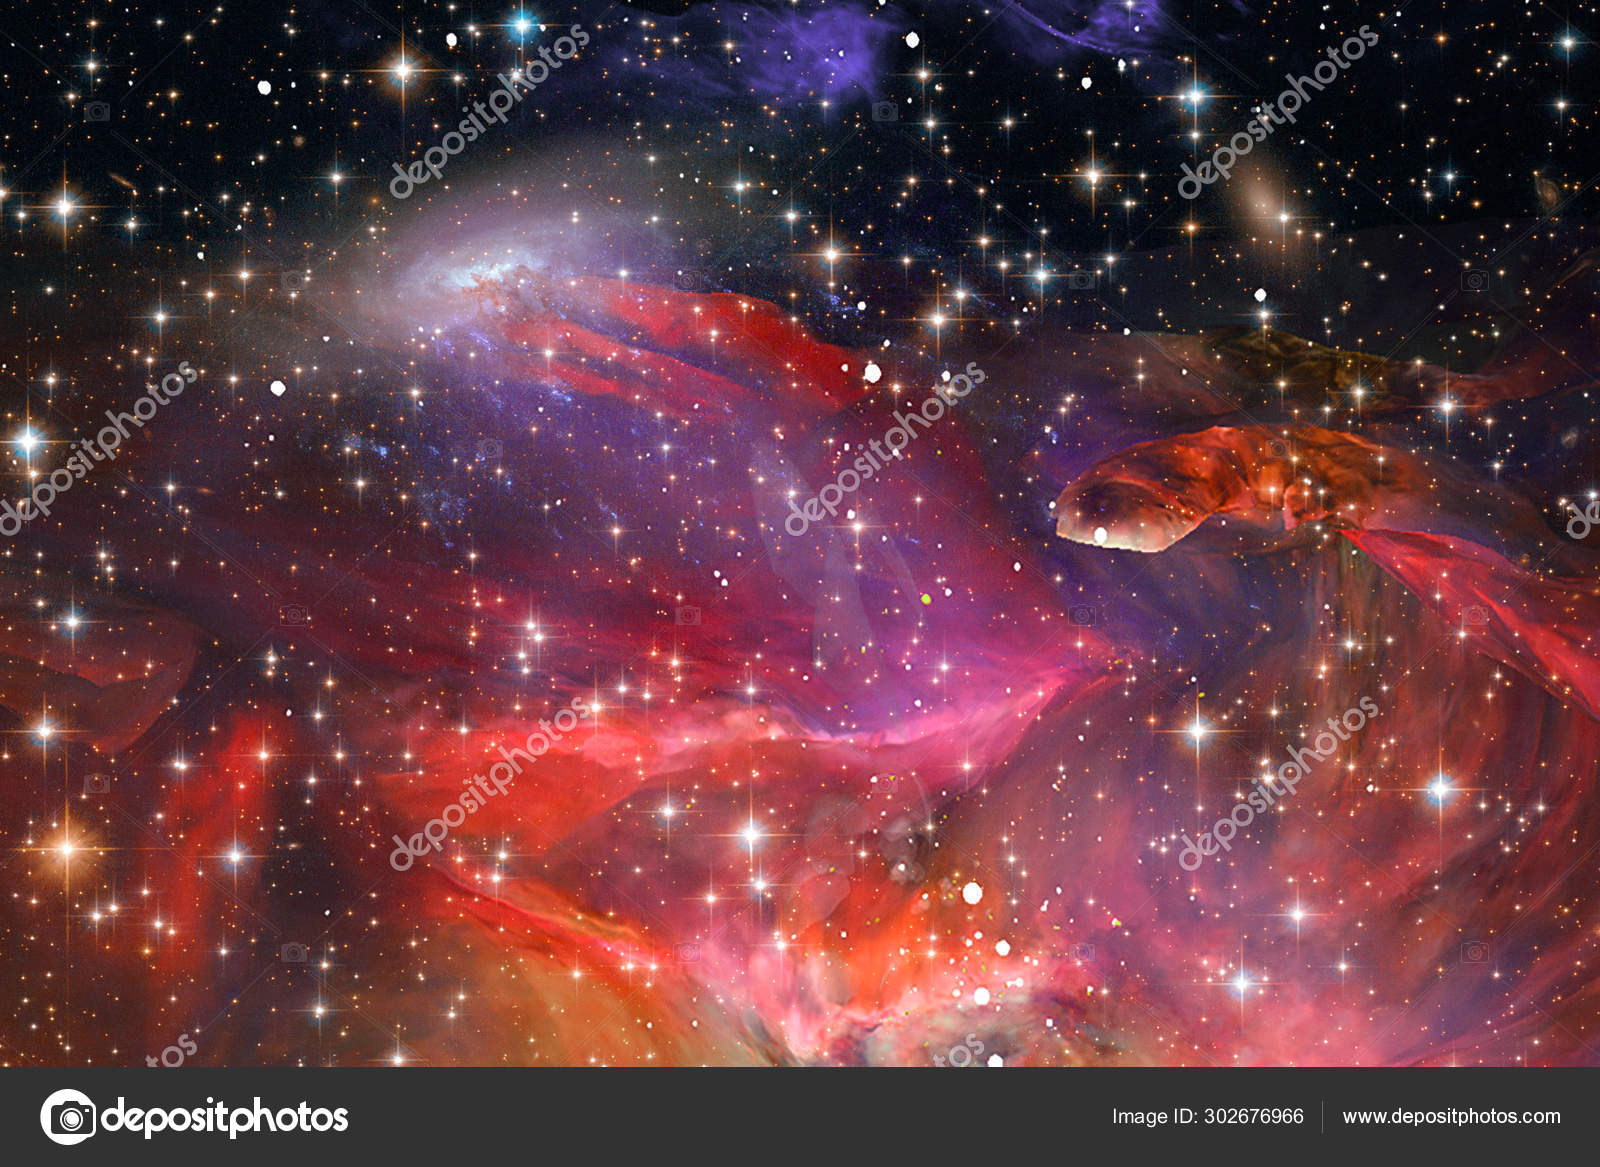 Space Background With Colorful Galaxy Cloud Nebula The Elements Stock Photo C Kvart777 Ukr Net 302676966